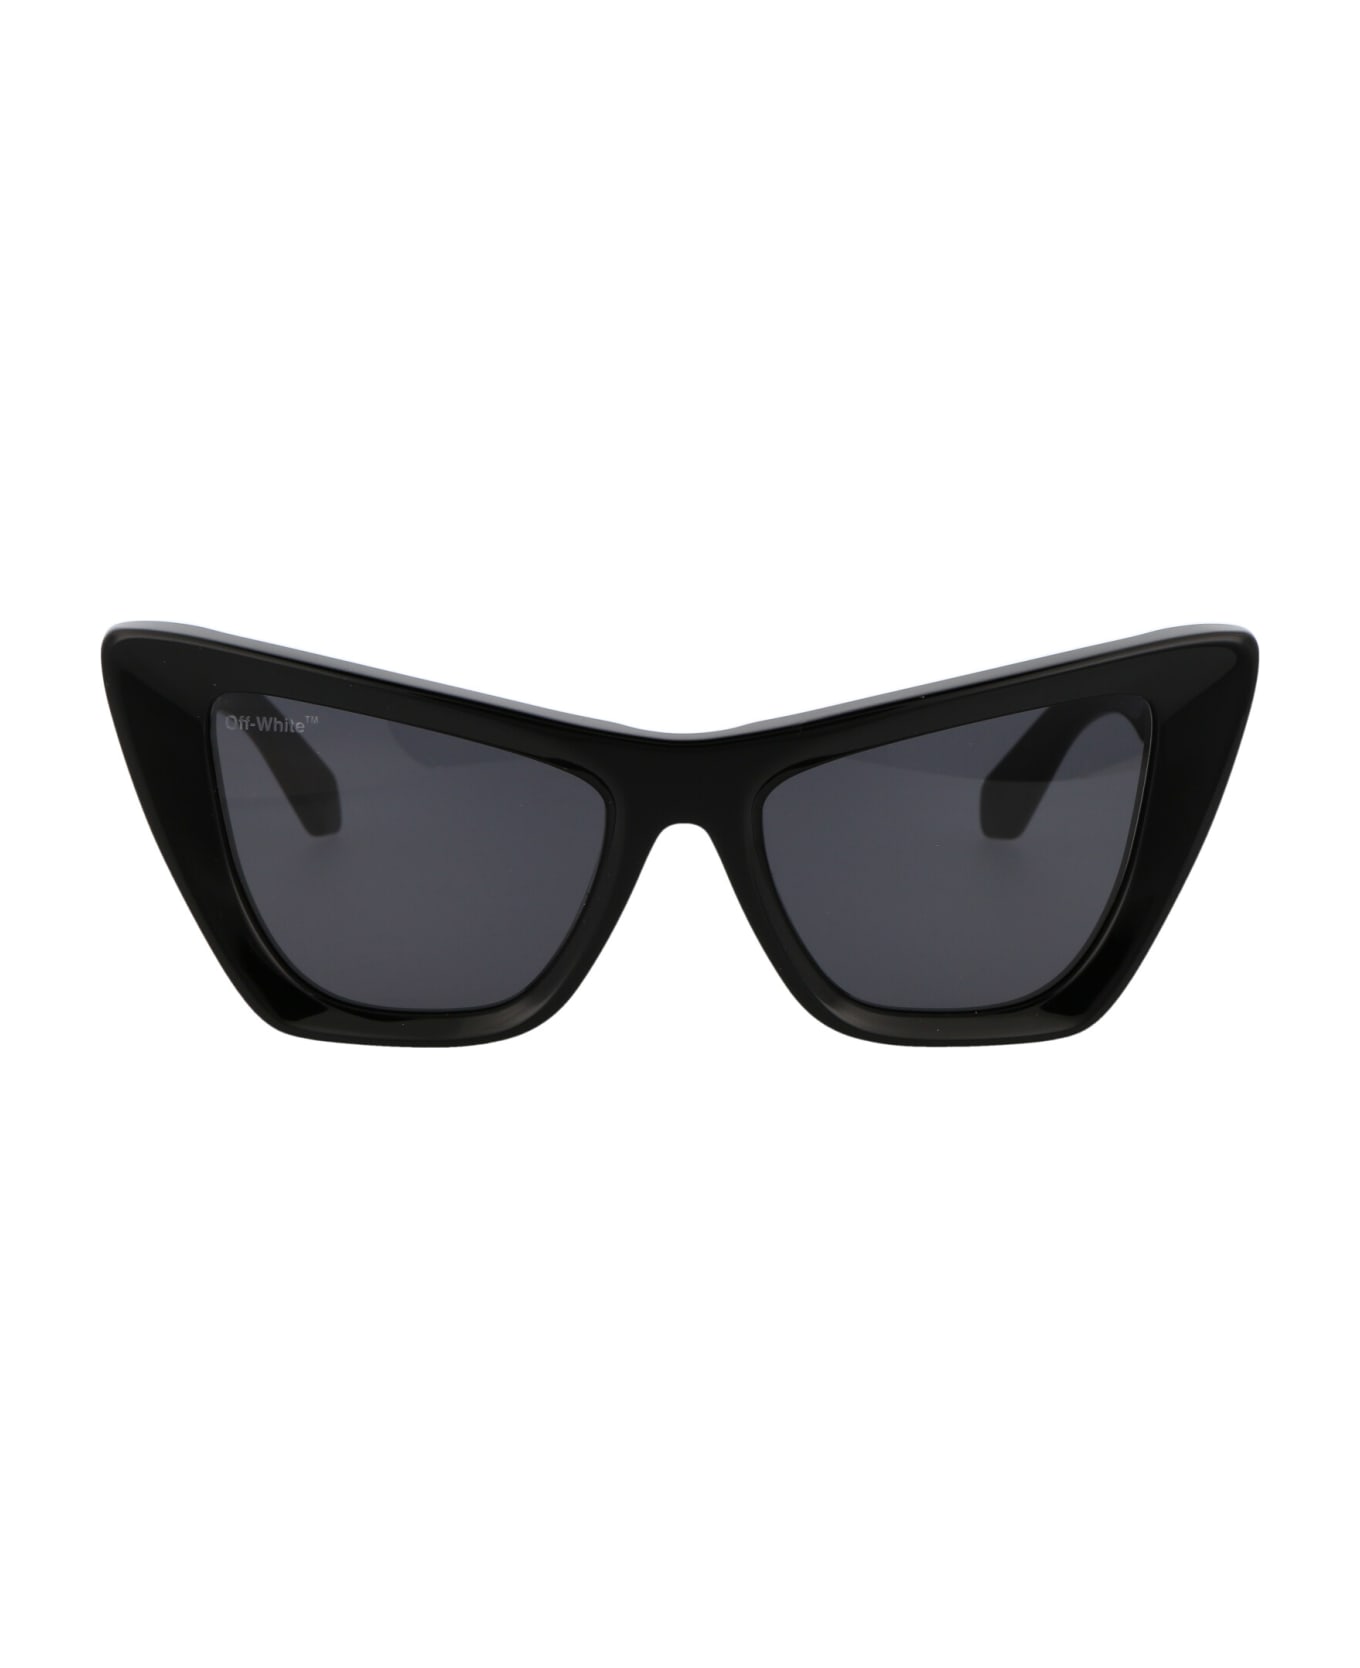 Off-White Edvard Sunglasses - 1007 BLACK